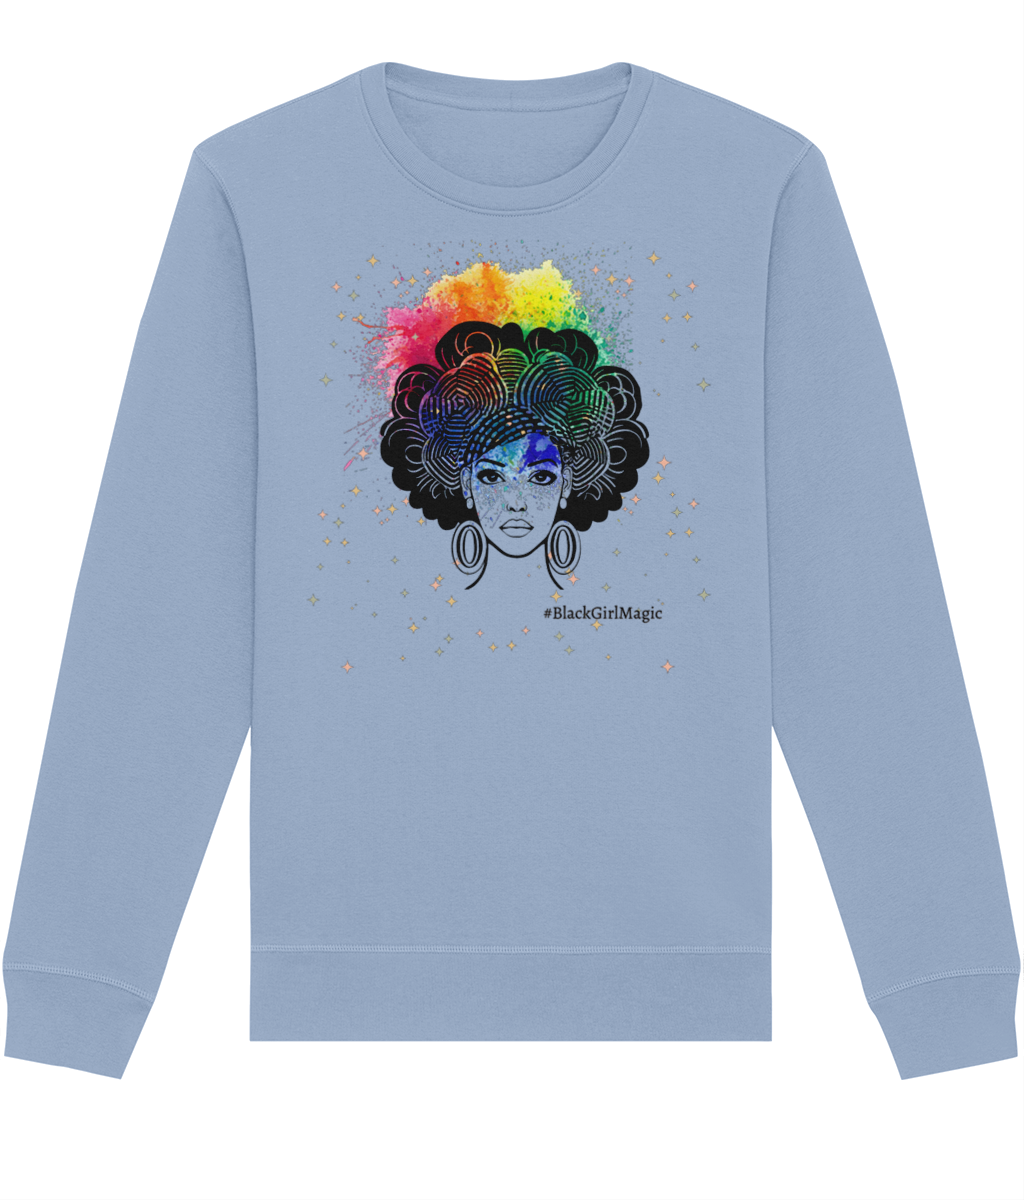 Roller Sweatshirt black girl magic